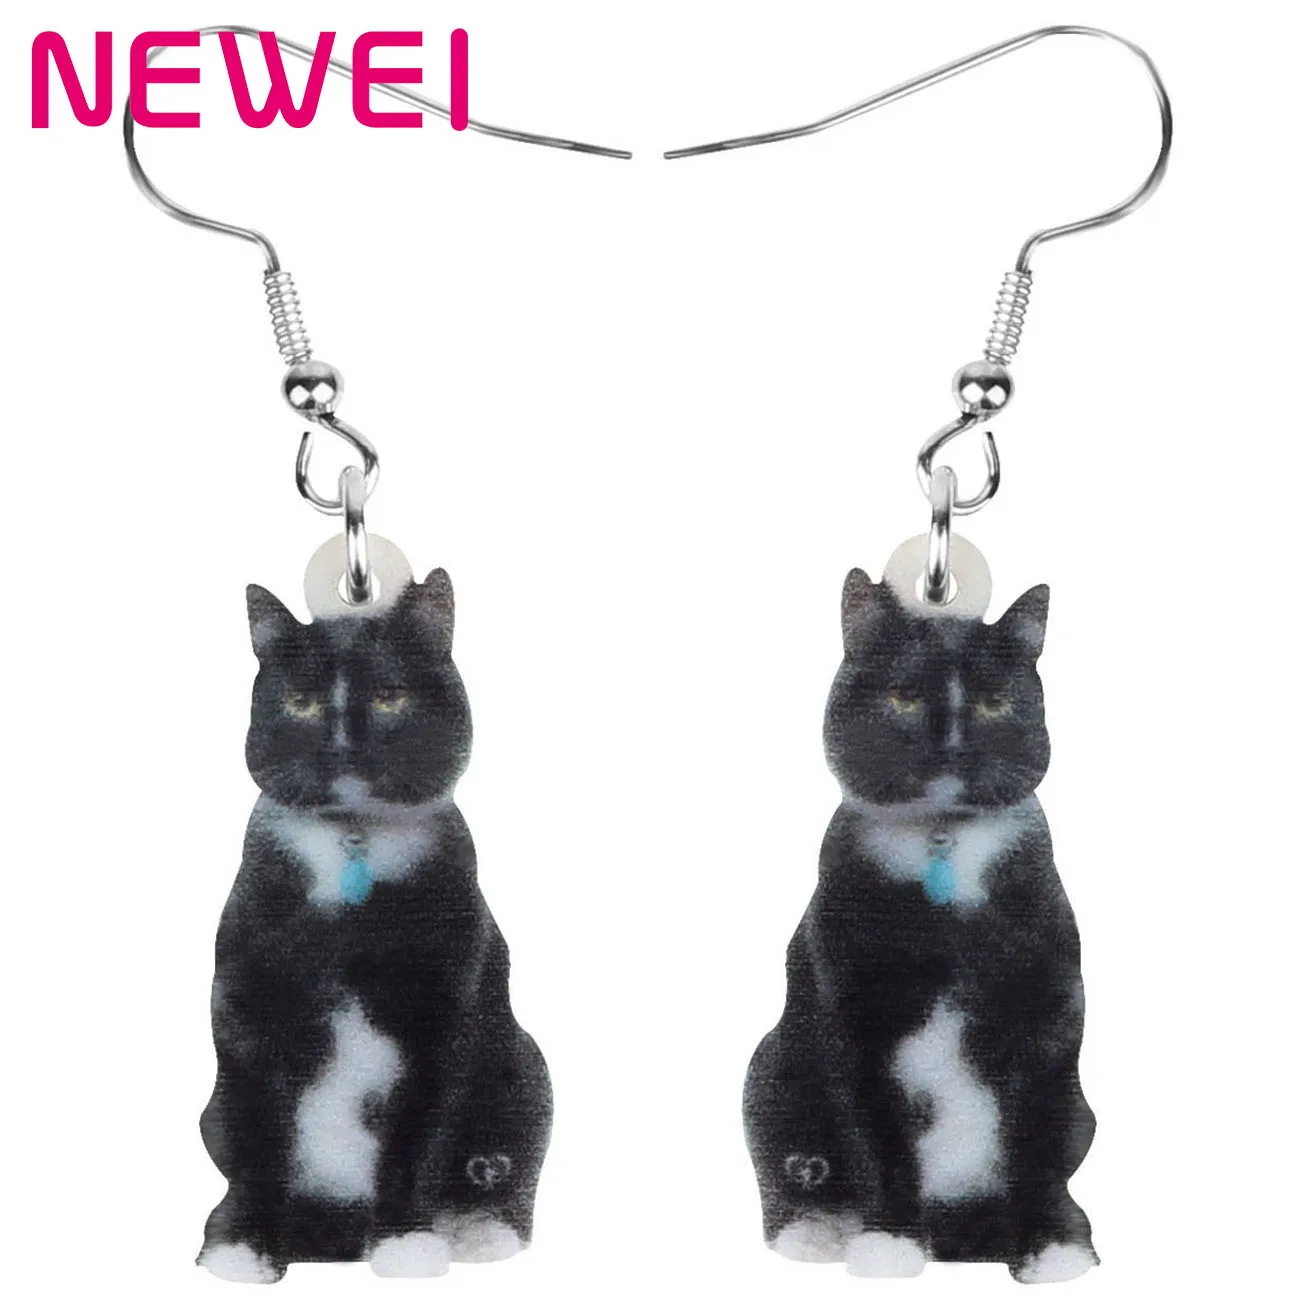 Acrylic Cute Black Kitten Cat Earrings Pets Drop Dangle Fashion Animals Jewelry For Women Girls Kids Teens Novelty Charms Gifts